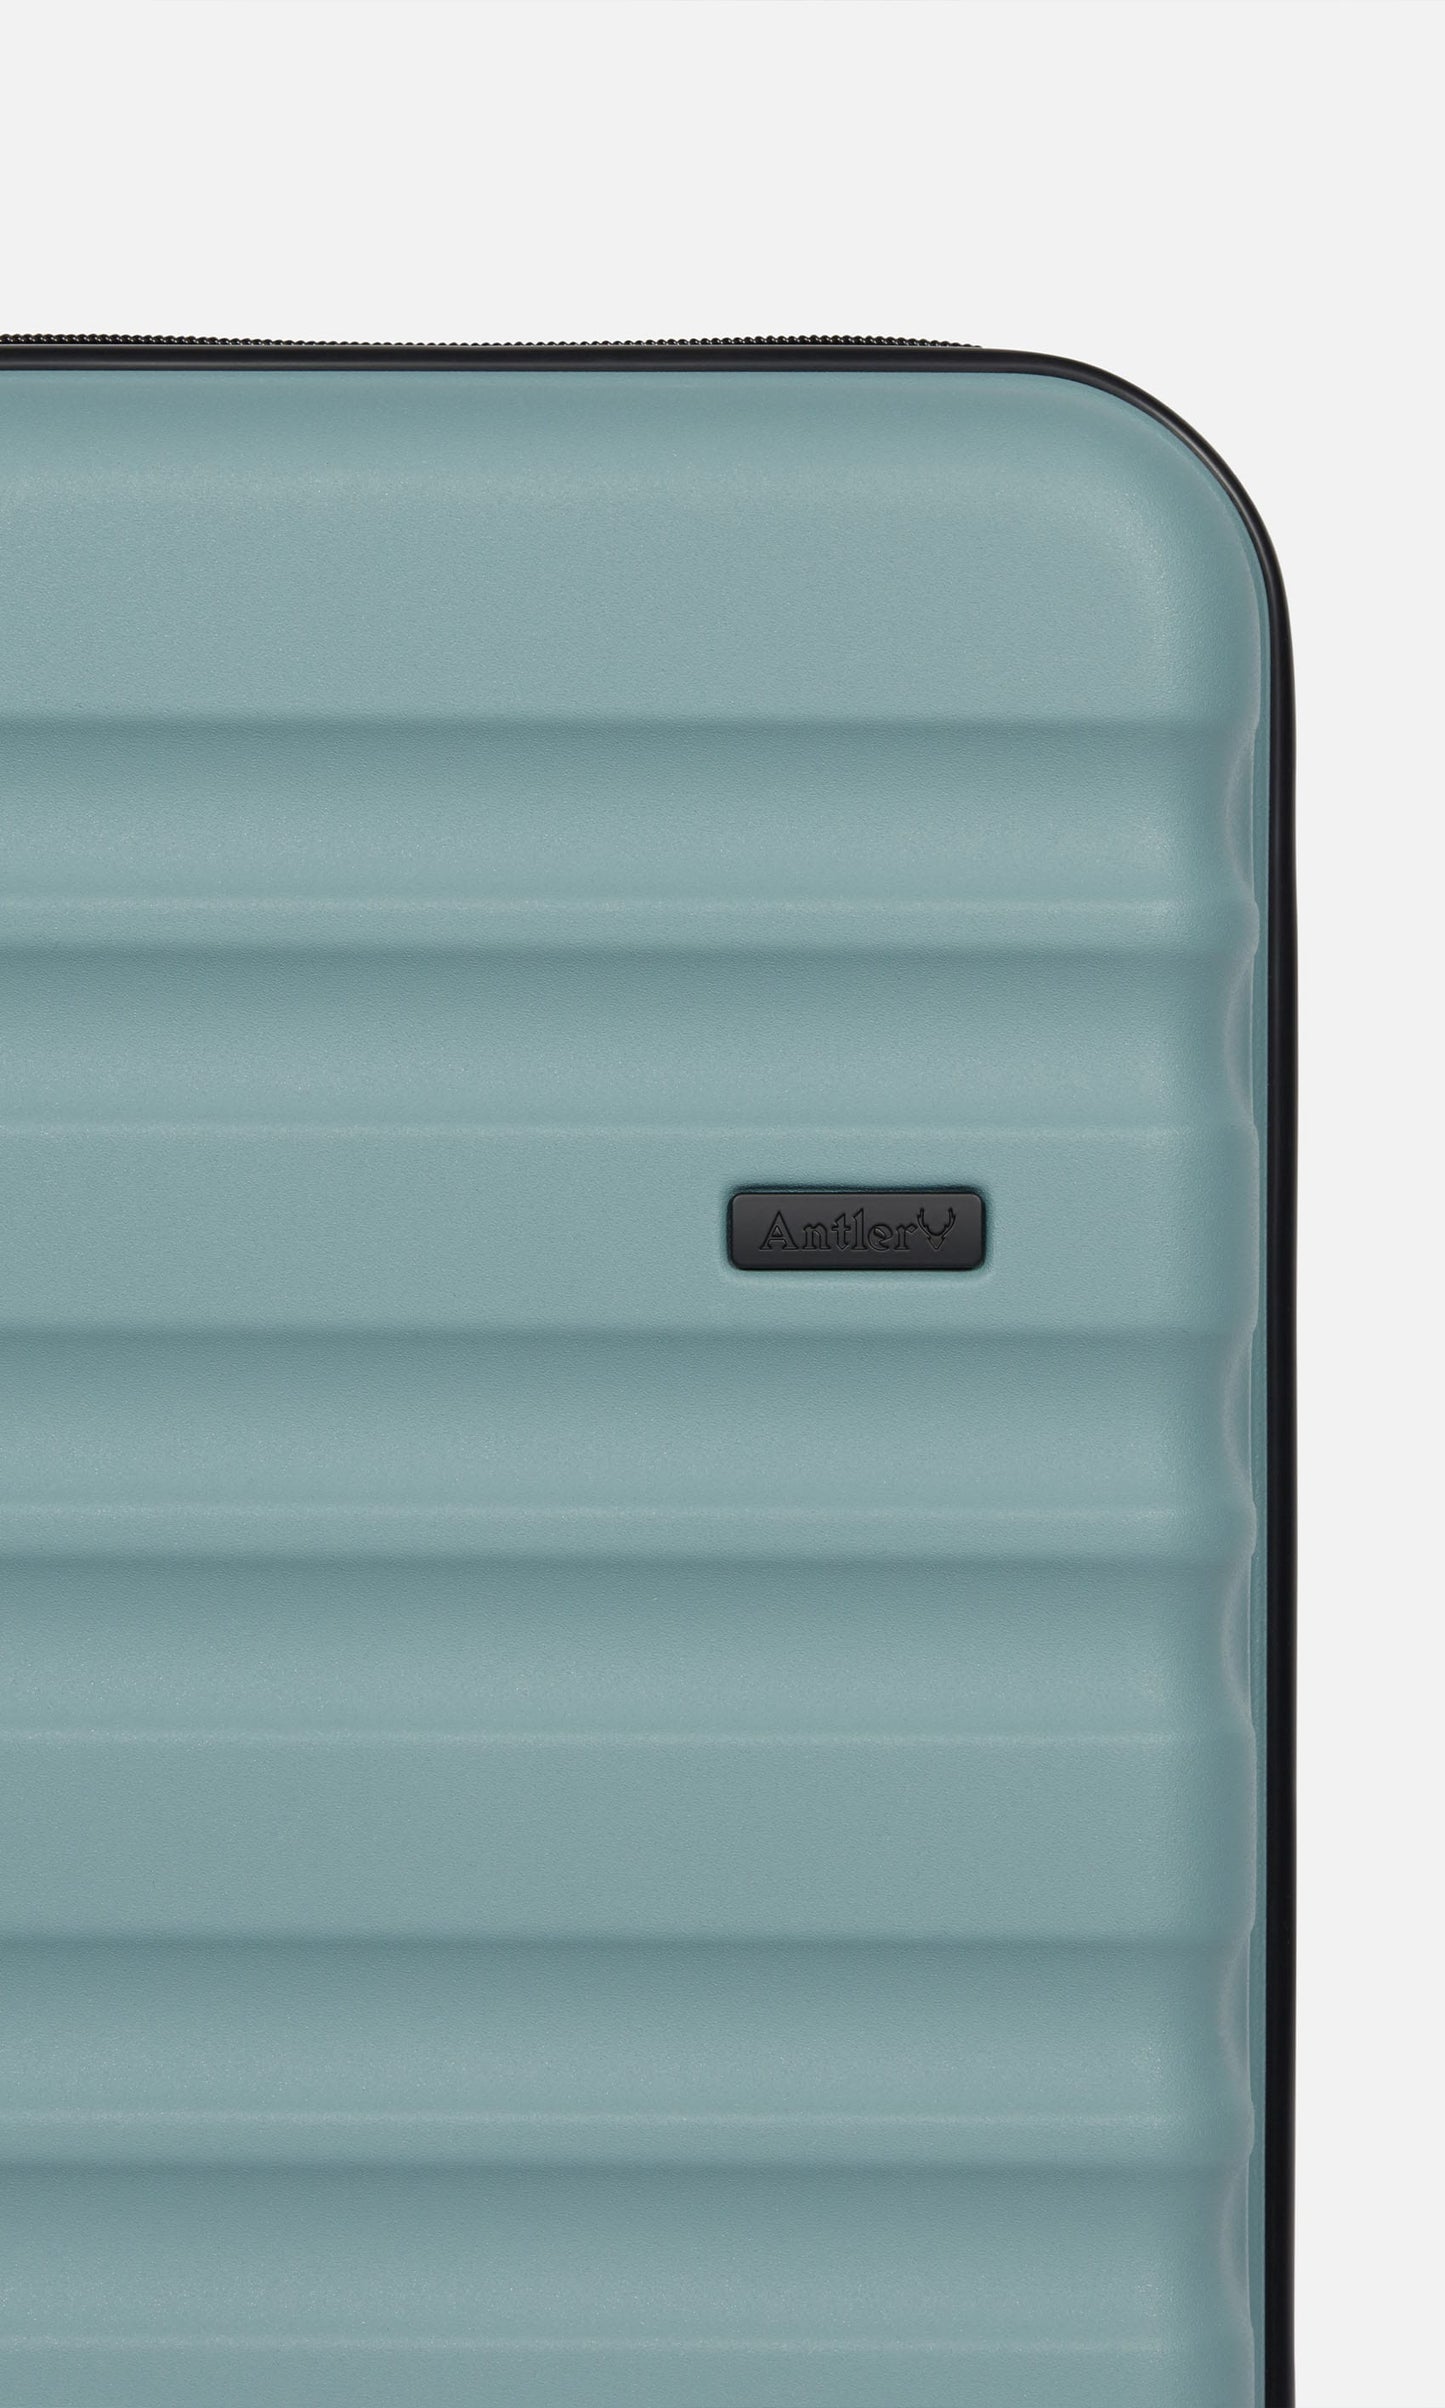 Antler Luggage -  Clifton cabin in mineral - Hard Suitcases Clifton 55x40x20cm Cabin Suitcase Mineral (Blue) | Hard Suitcase | Antler UK